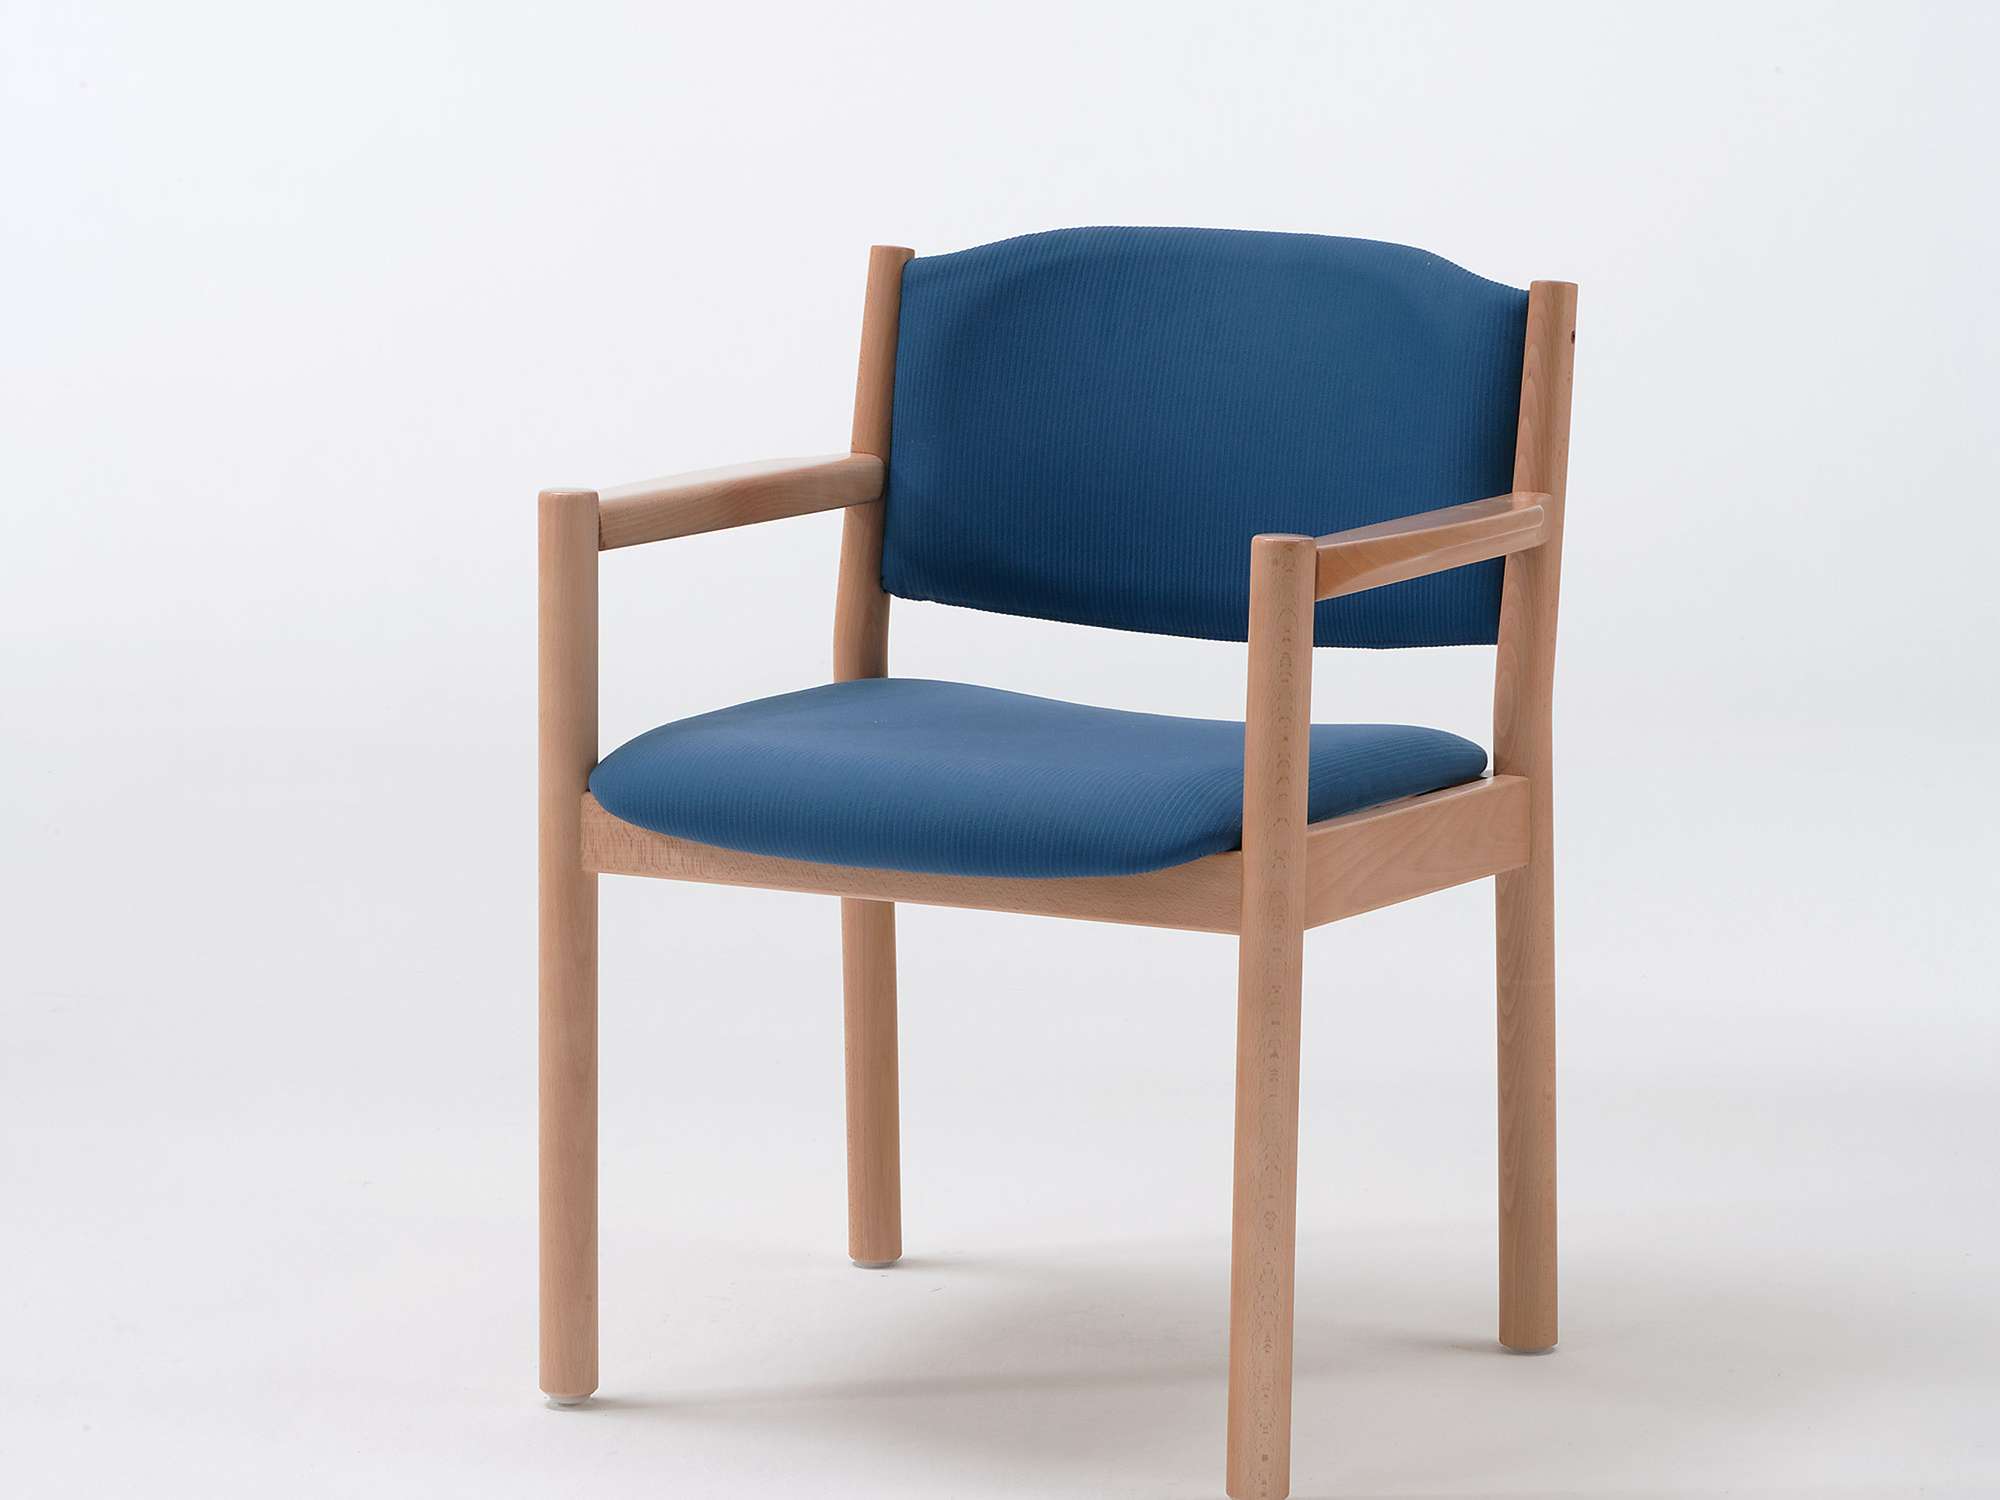 The Primo model as an armchair